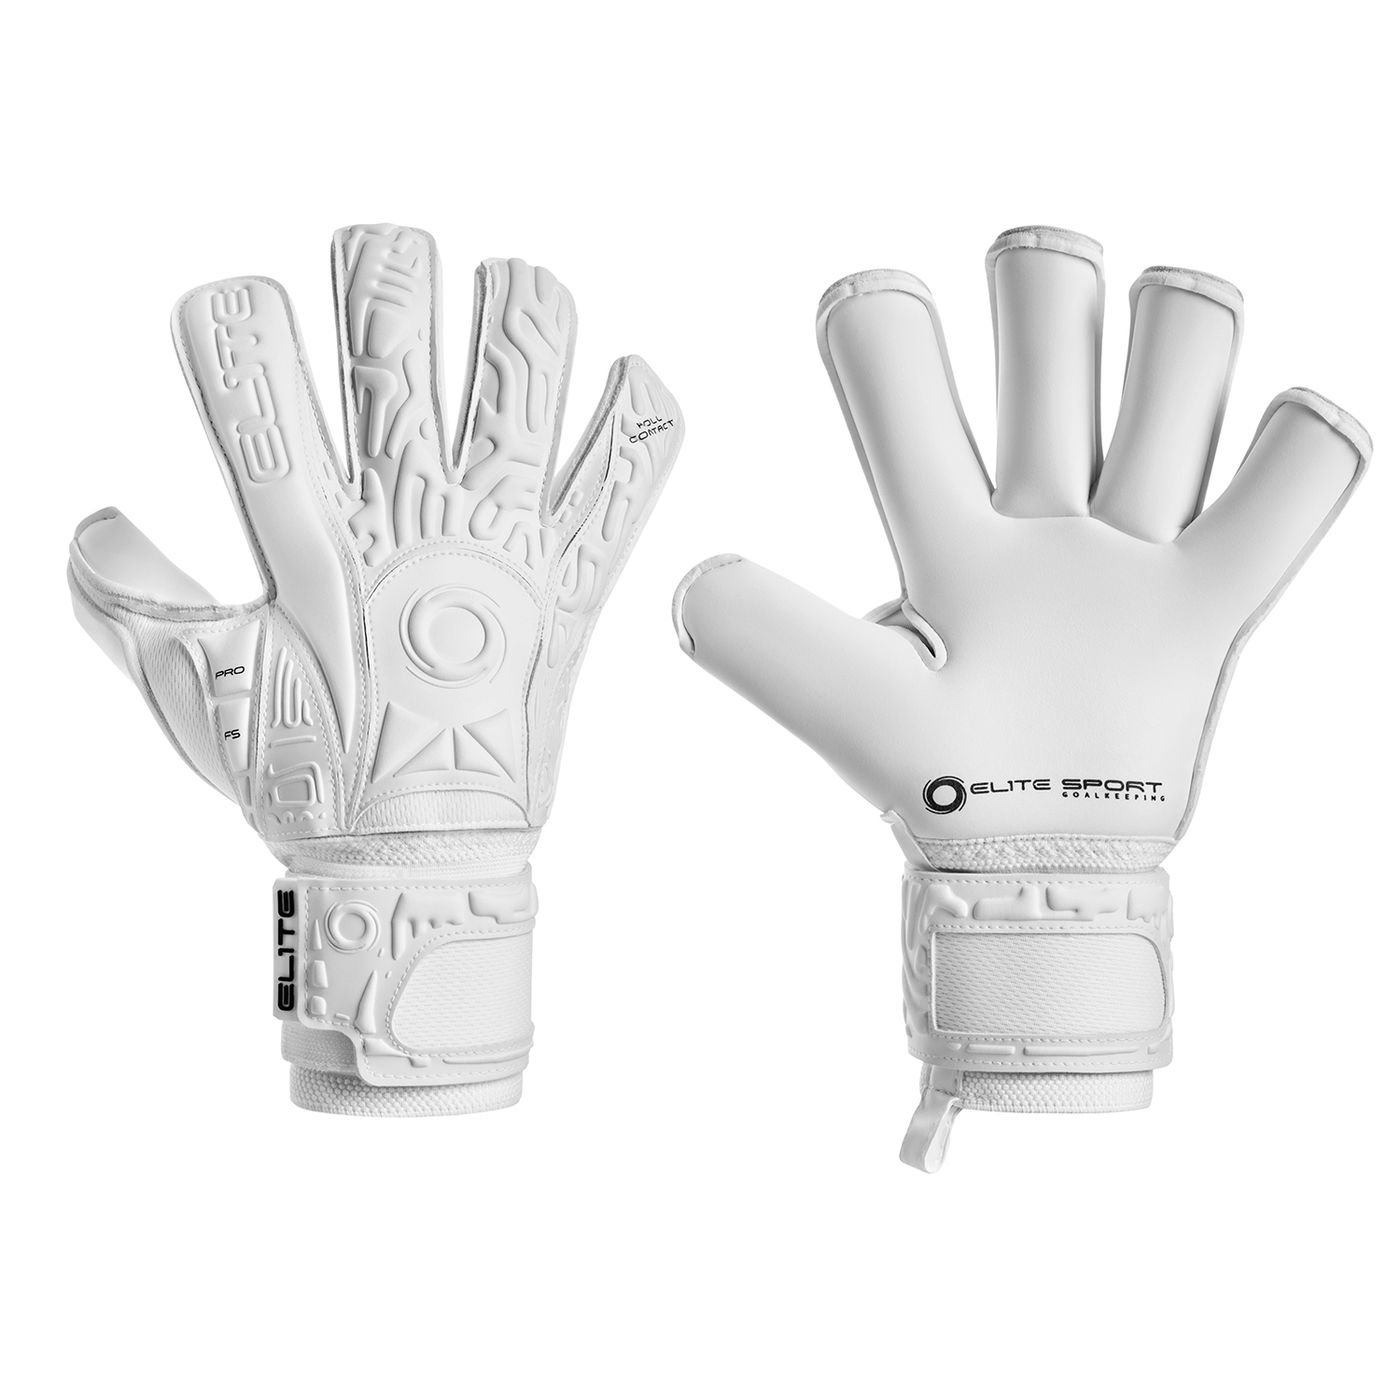 Вратарские перчатки Elite Sport SOLO White купить